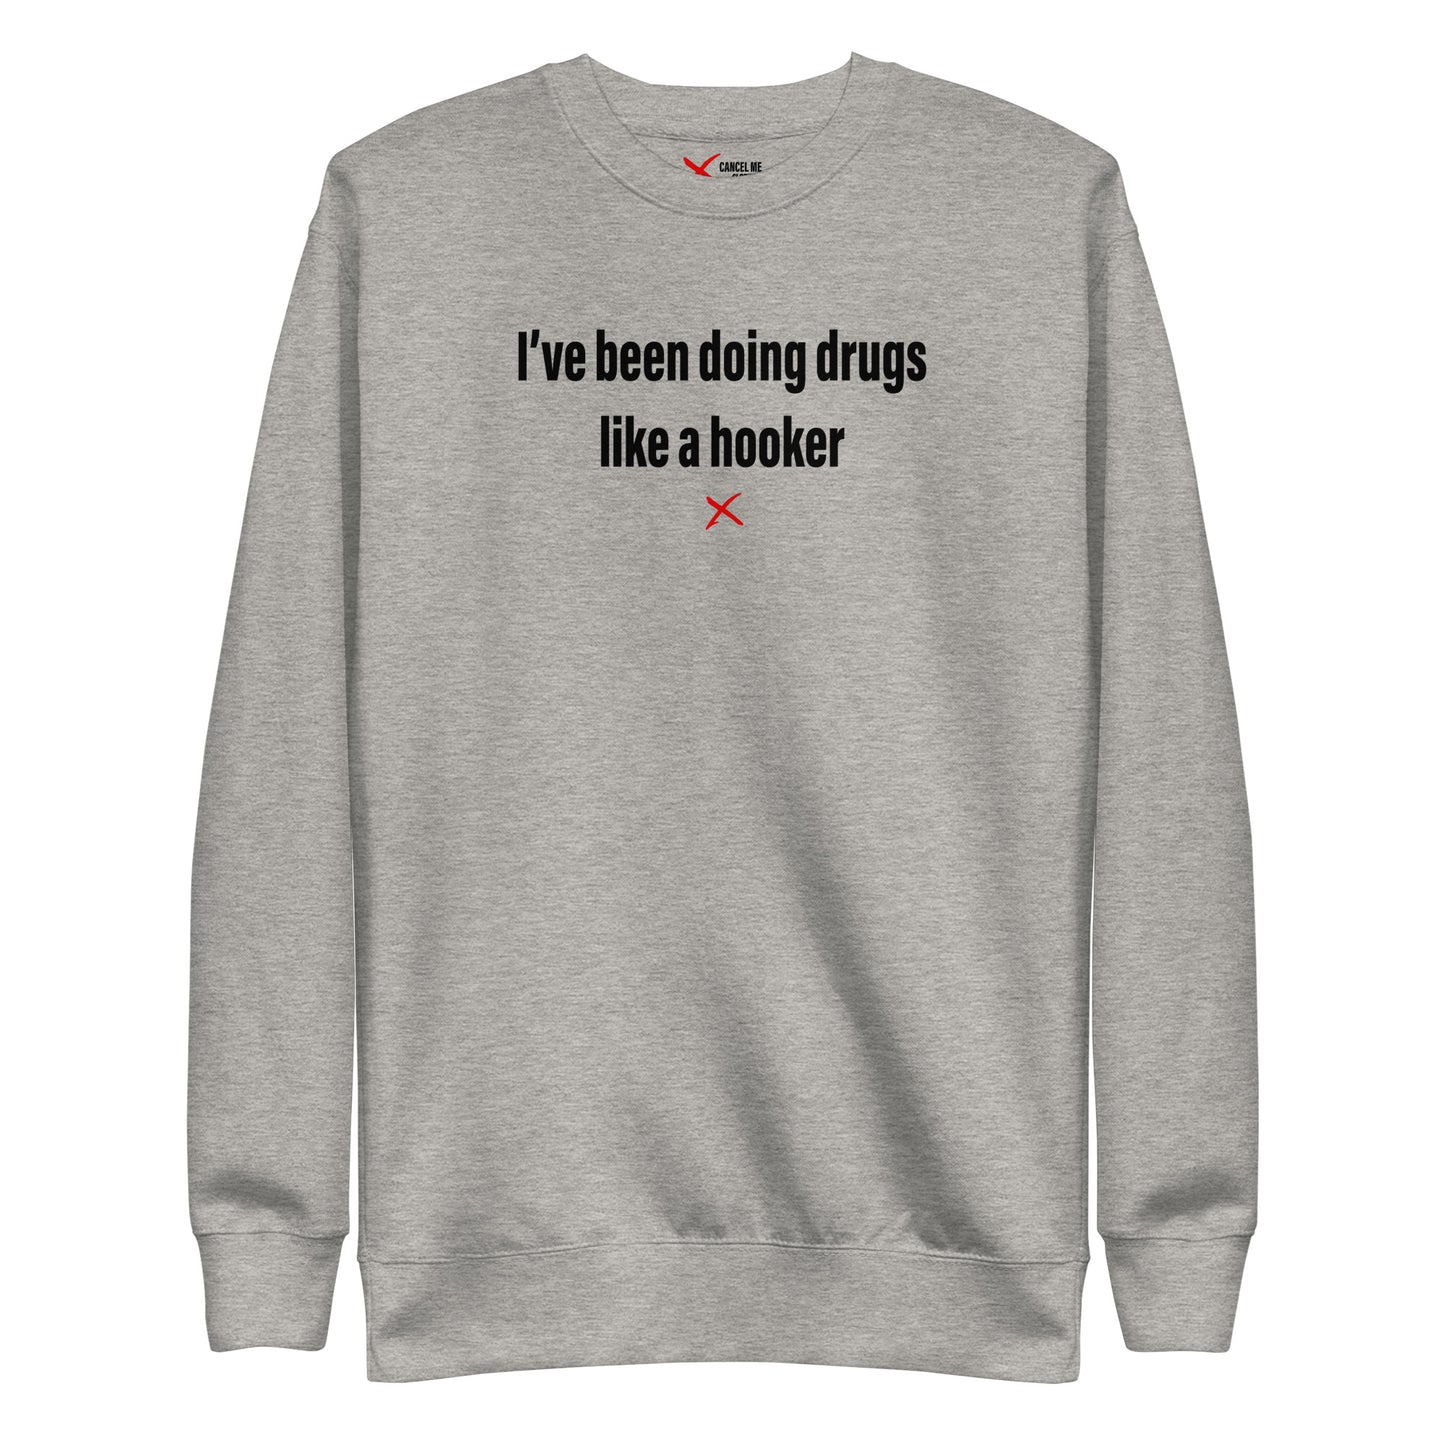 I've been doing drugs like a hooker - Sweatshirt